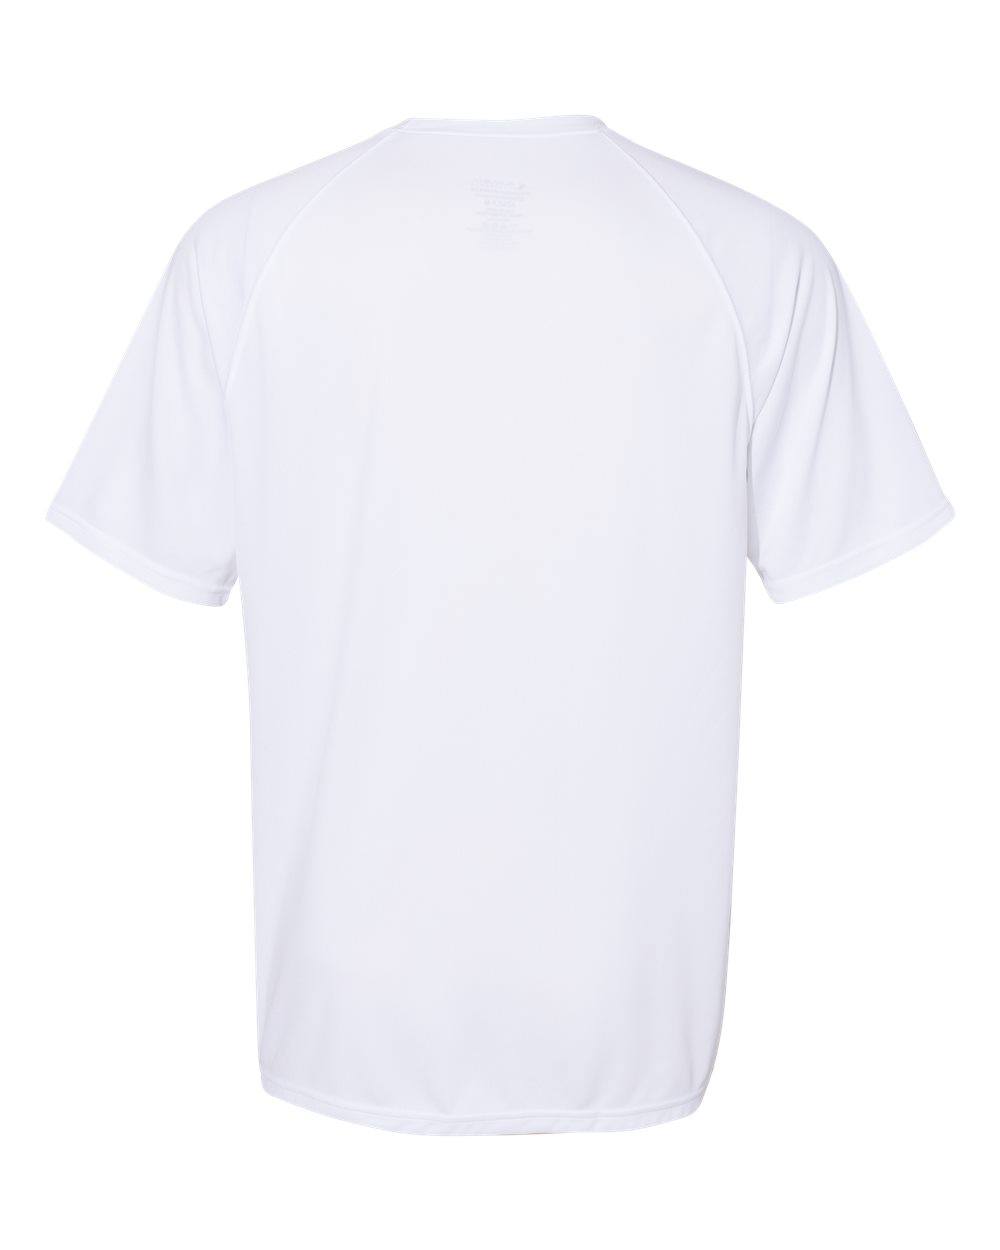 Attain Color Secure® Performance Shirt - 2790-Augusta Sportswear